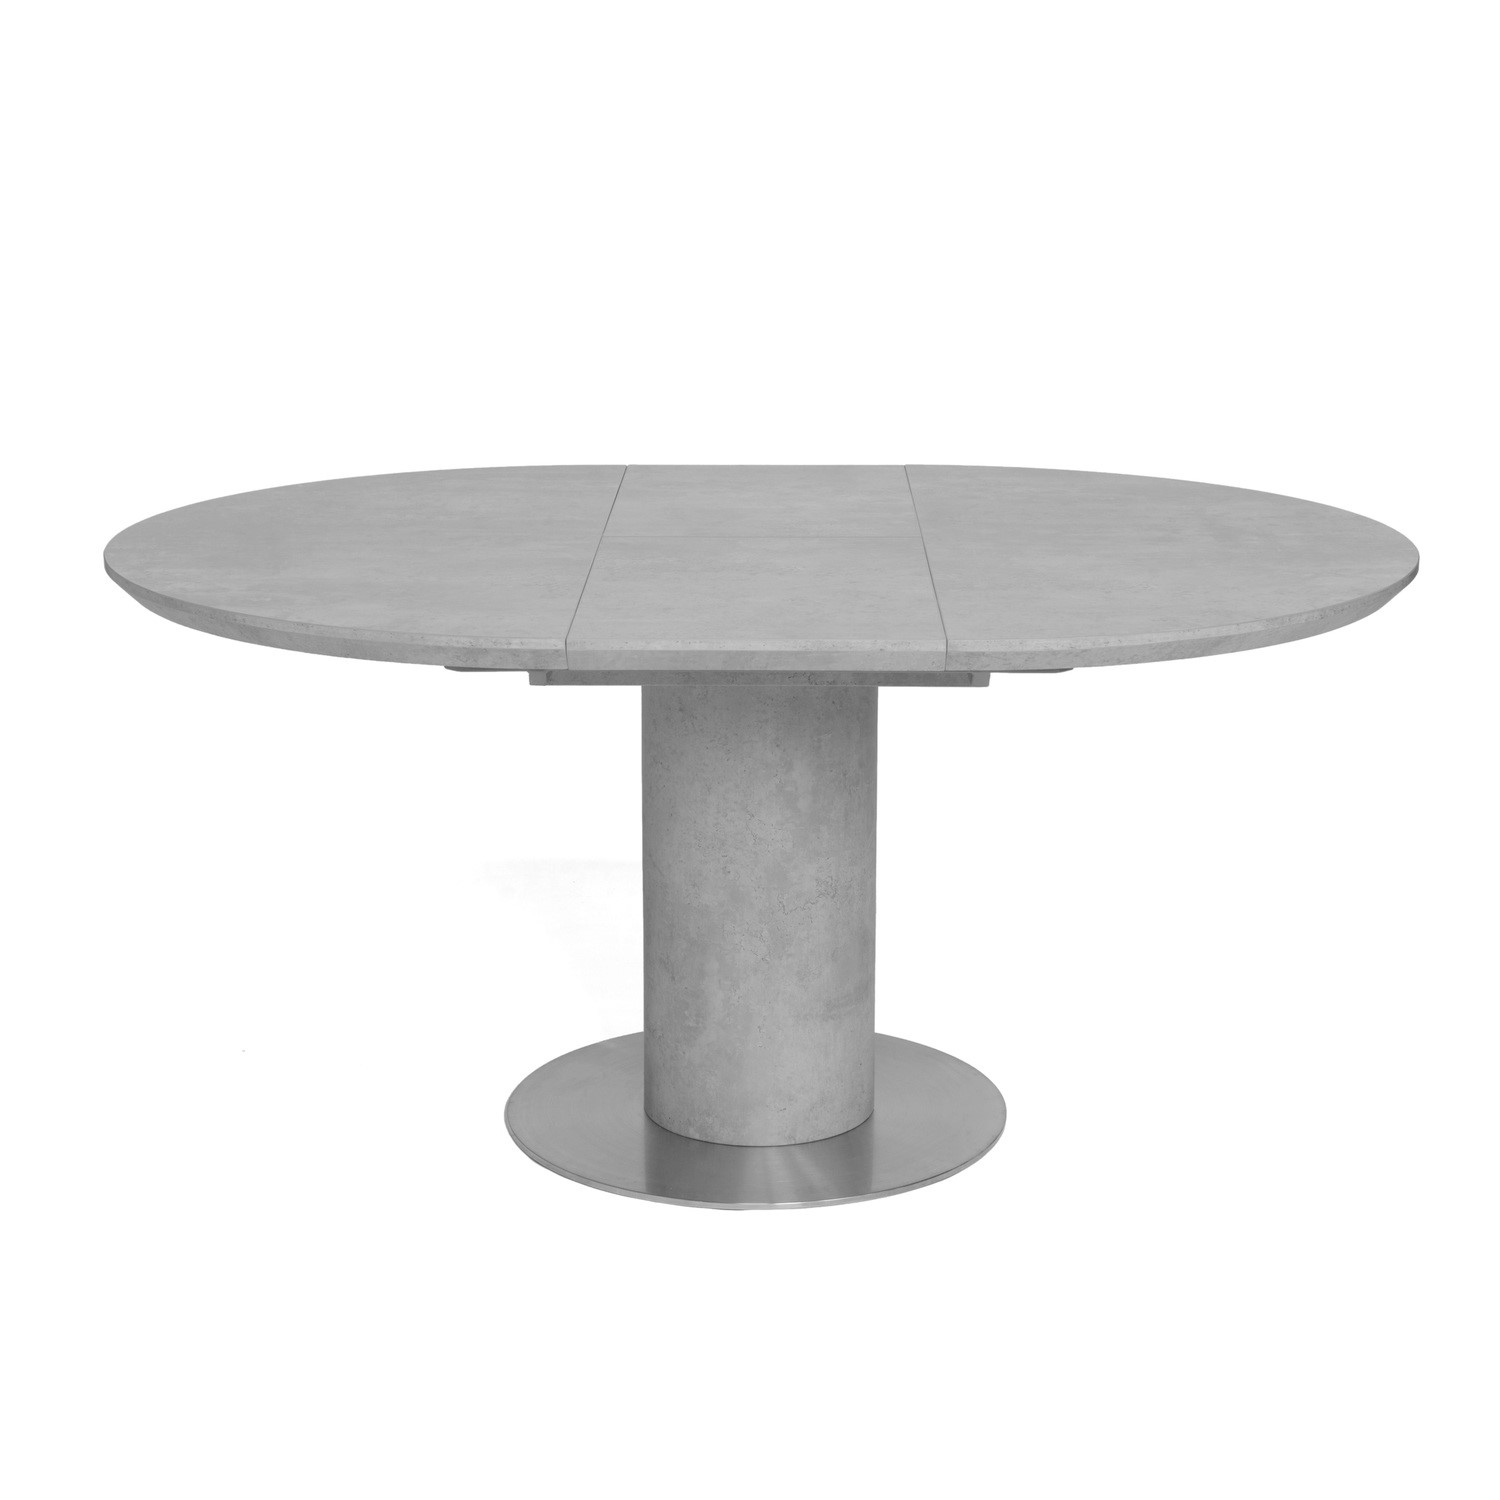 Photo of Grey concrete effect round extendable dining table - seats 4-6 - etan